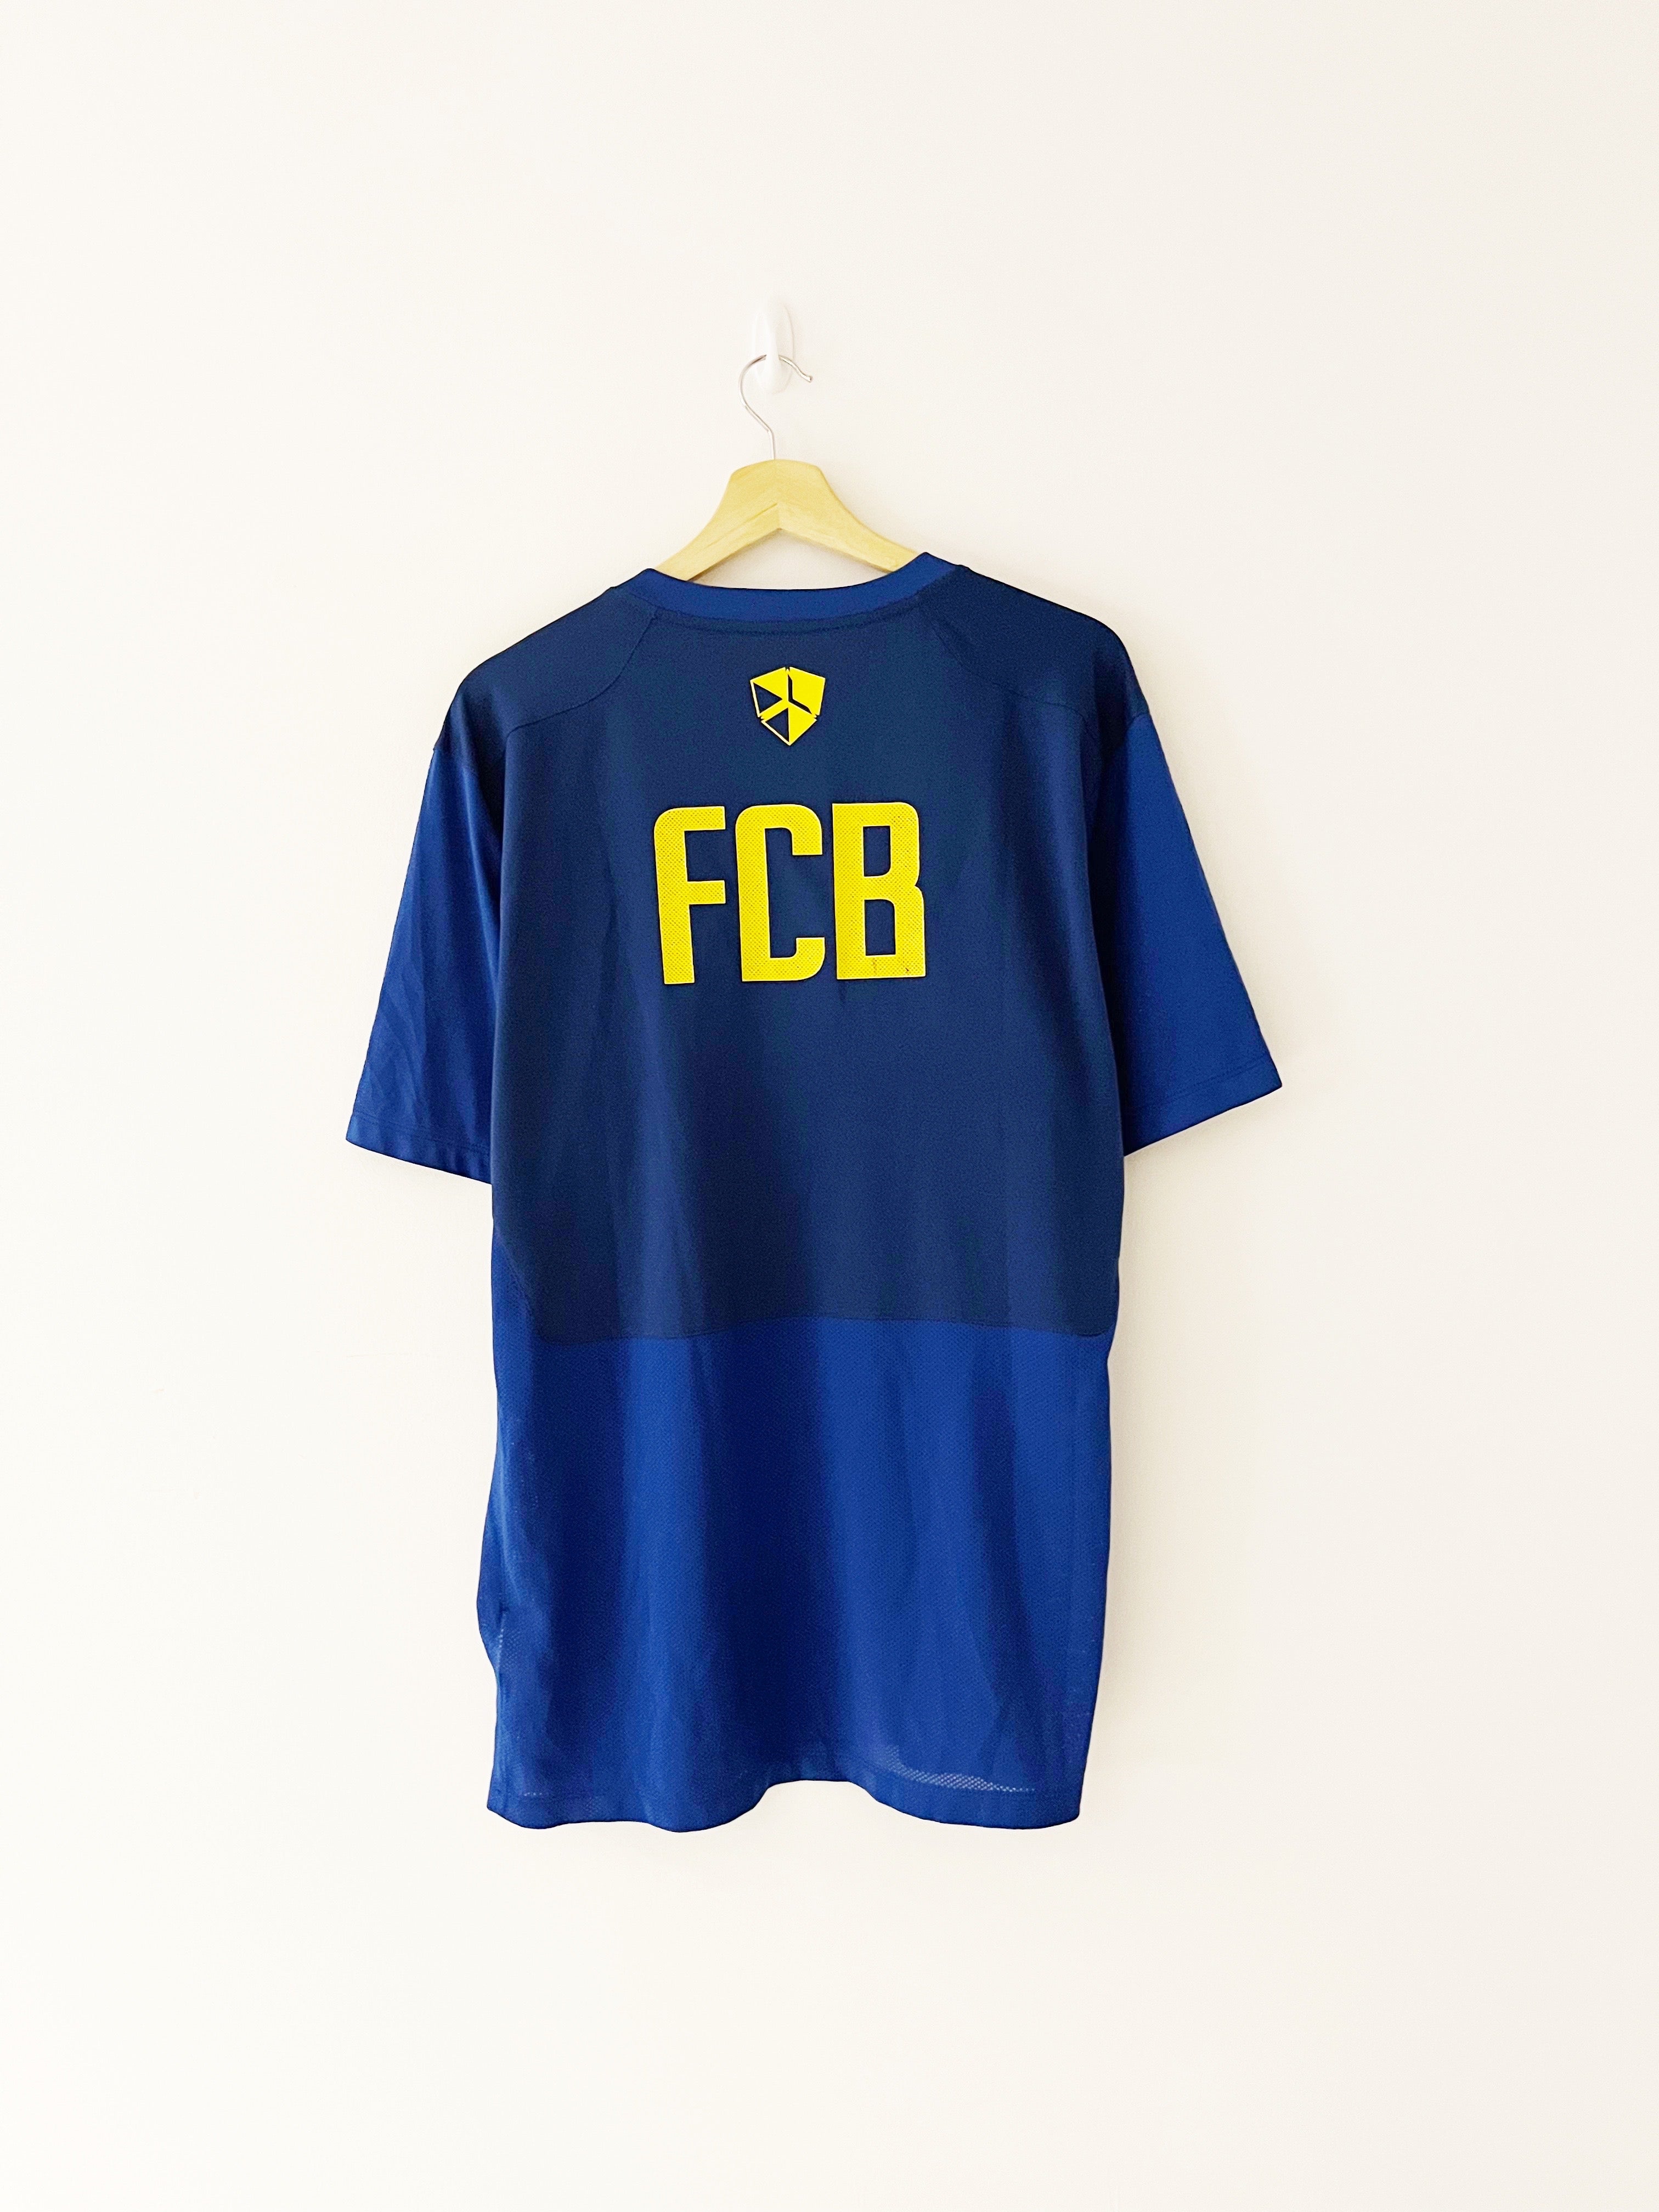 2012/13 Barcelona Training Shirt (XL) 9/10